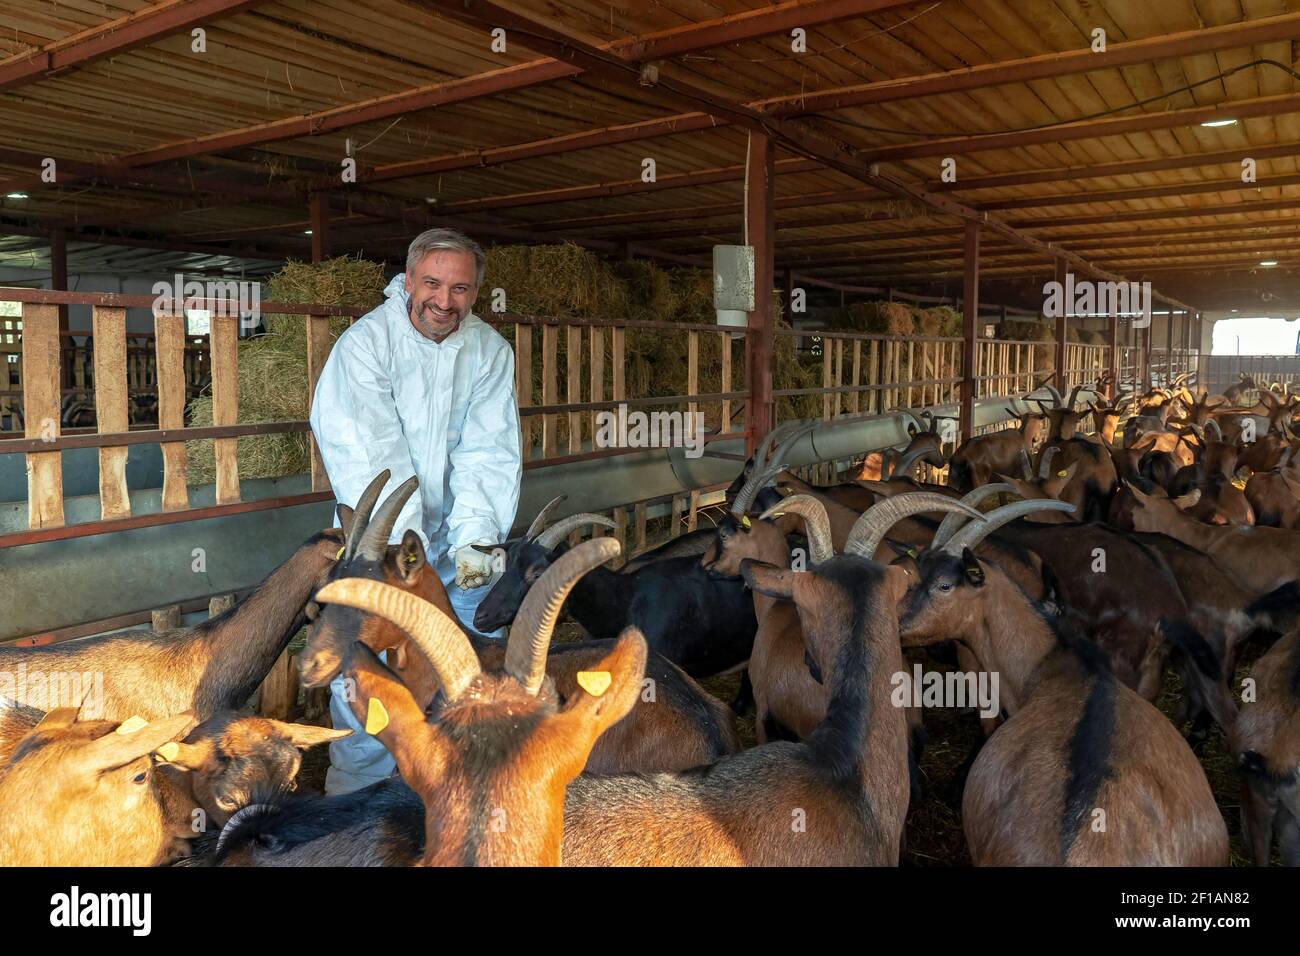 Animal Husbandry Concept. Happy Farmer and His Goats at Goat Dairy Farm. A Farmer Carefully Raises His Goats at Organic Animal Farm. Stock Photo